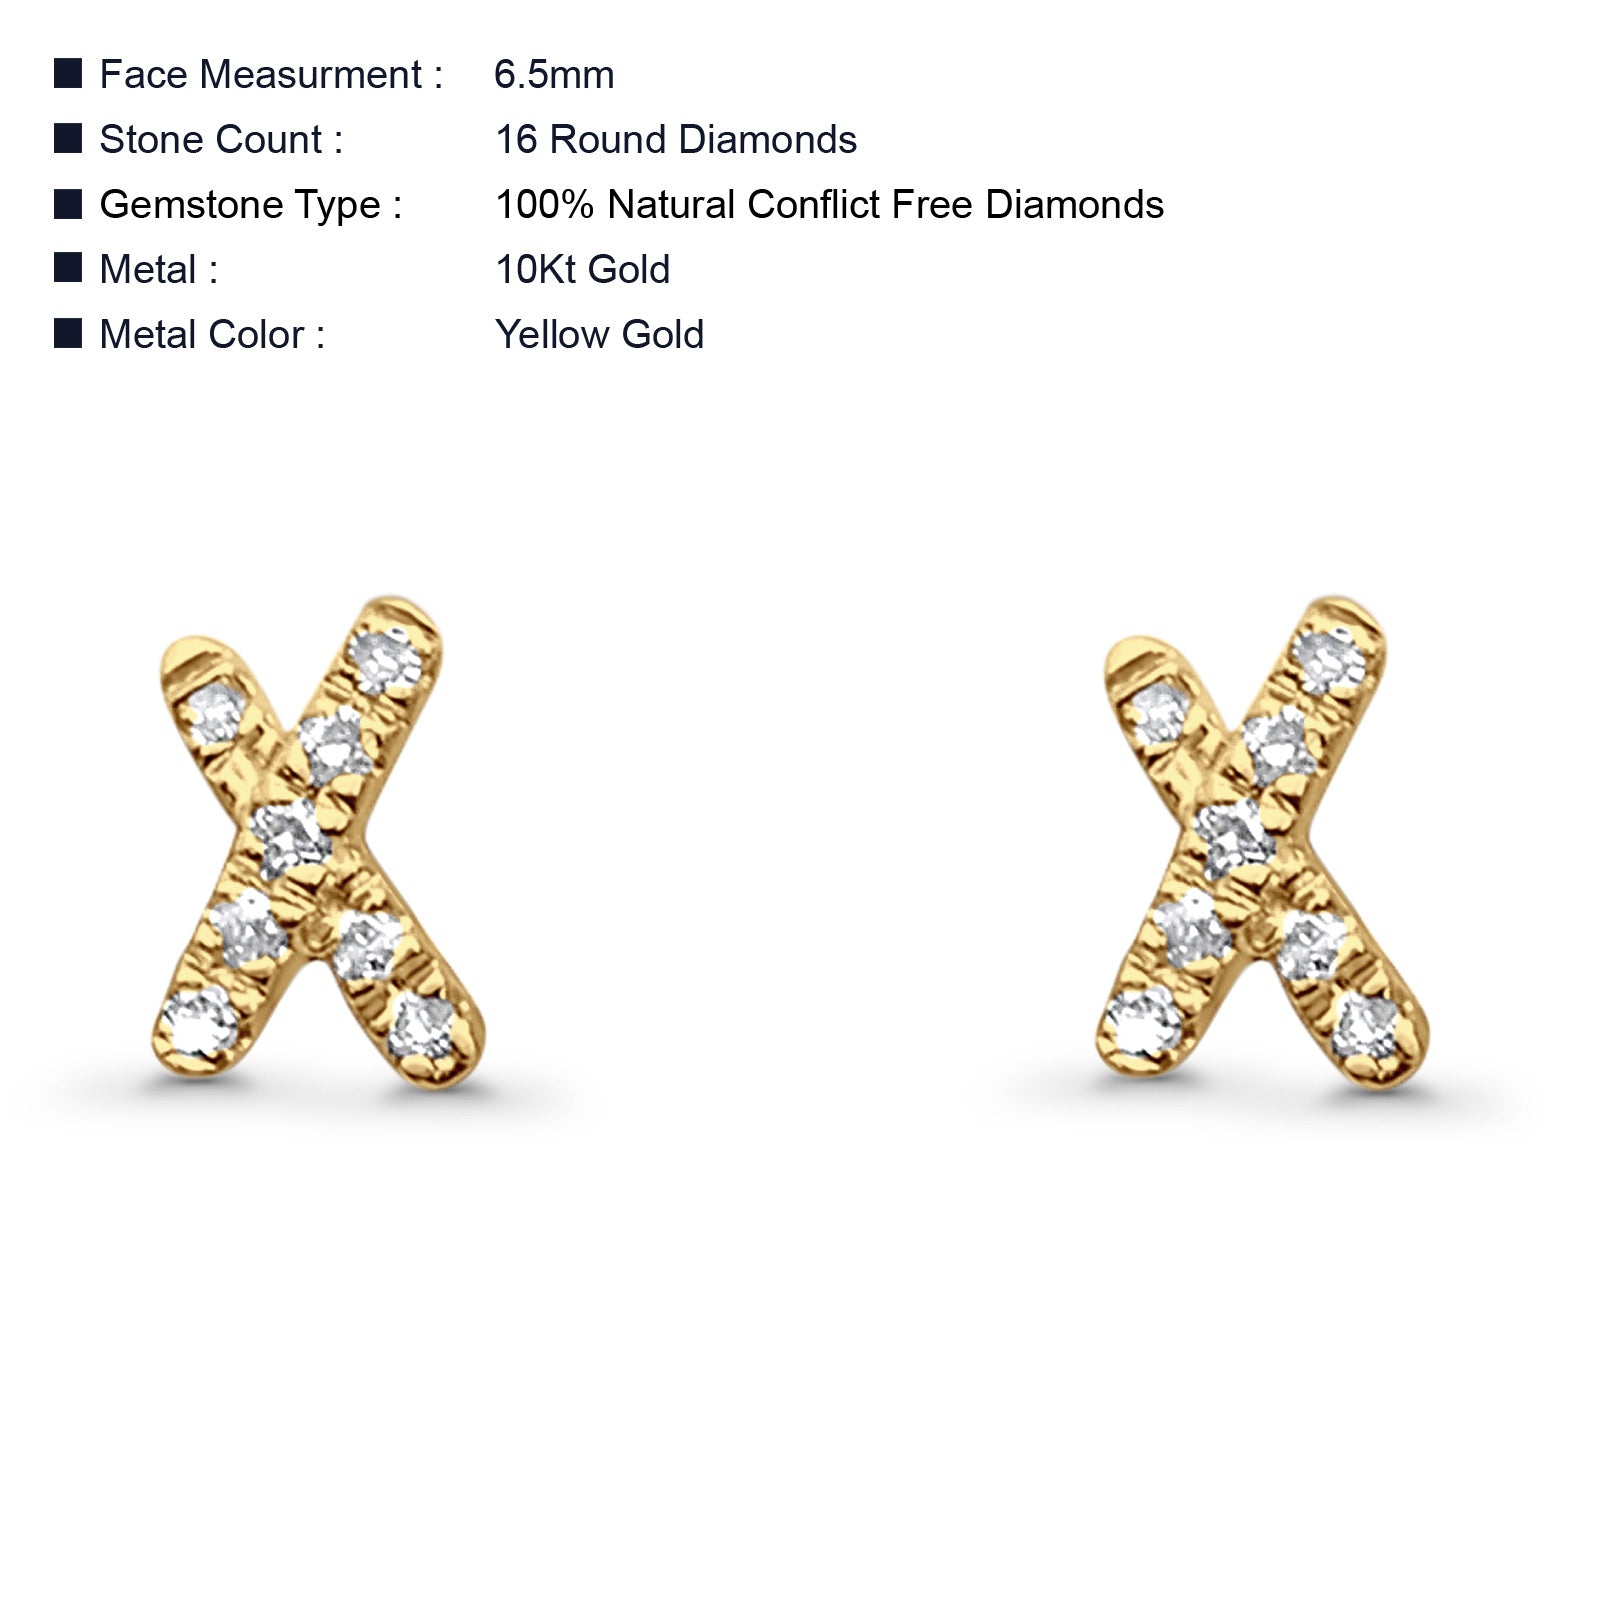 Solid 10K Gold 6.5mm "X" Shaped Crisscross Round Diamond Stud Earrings